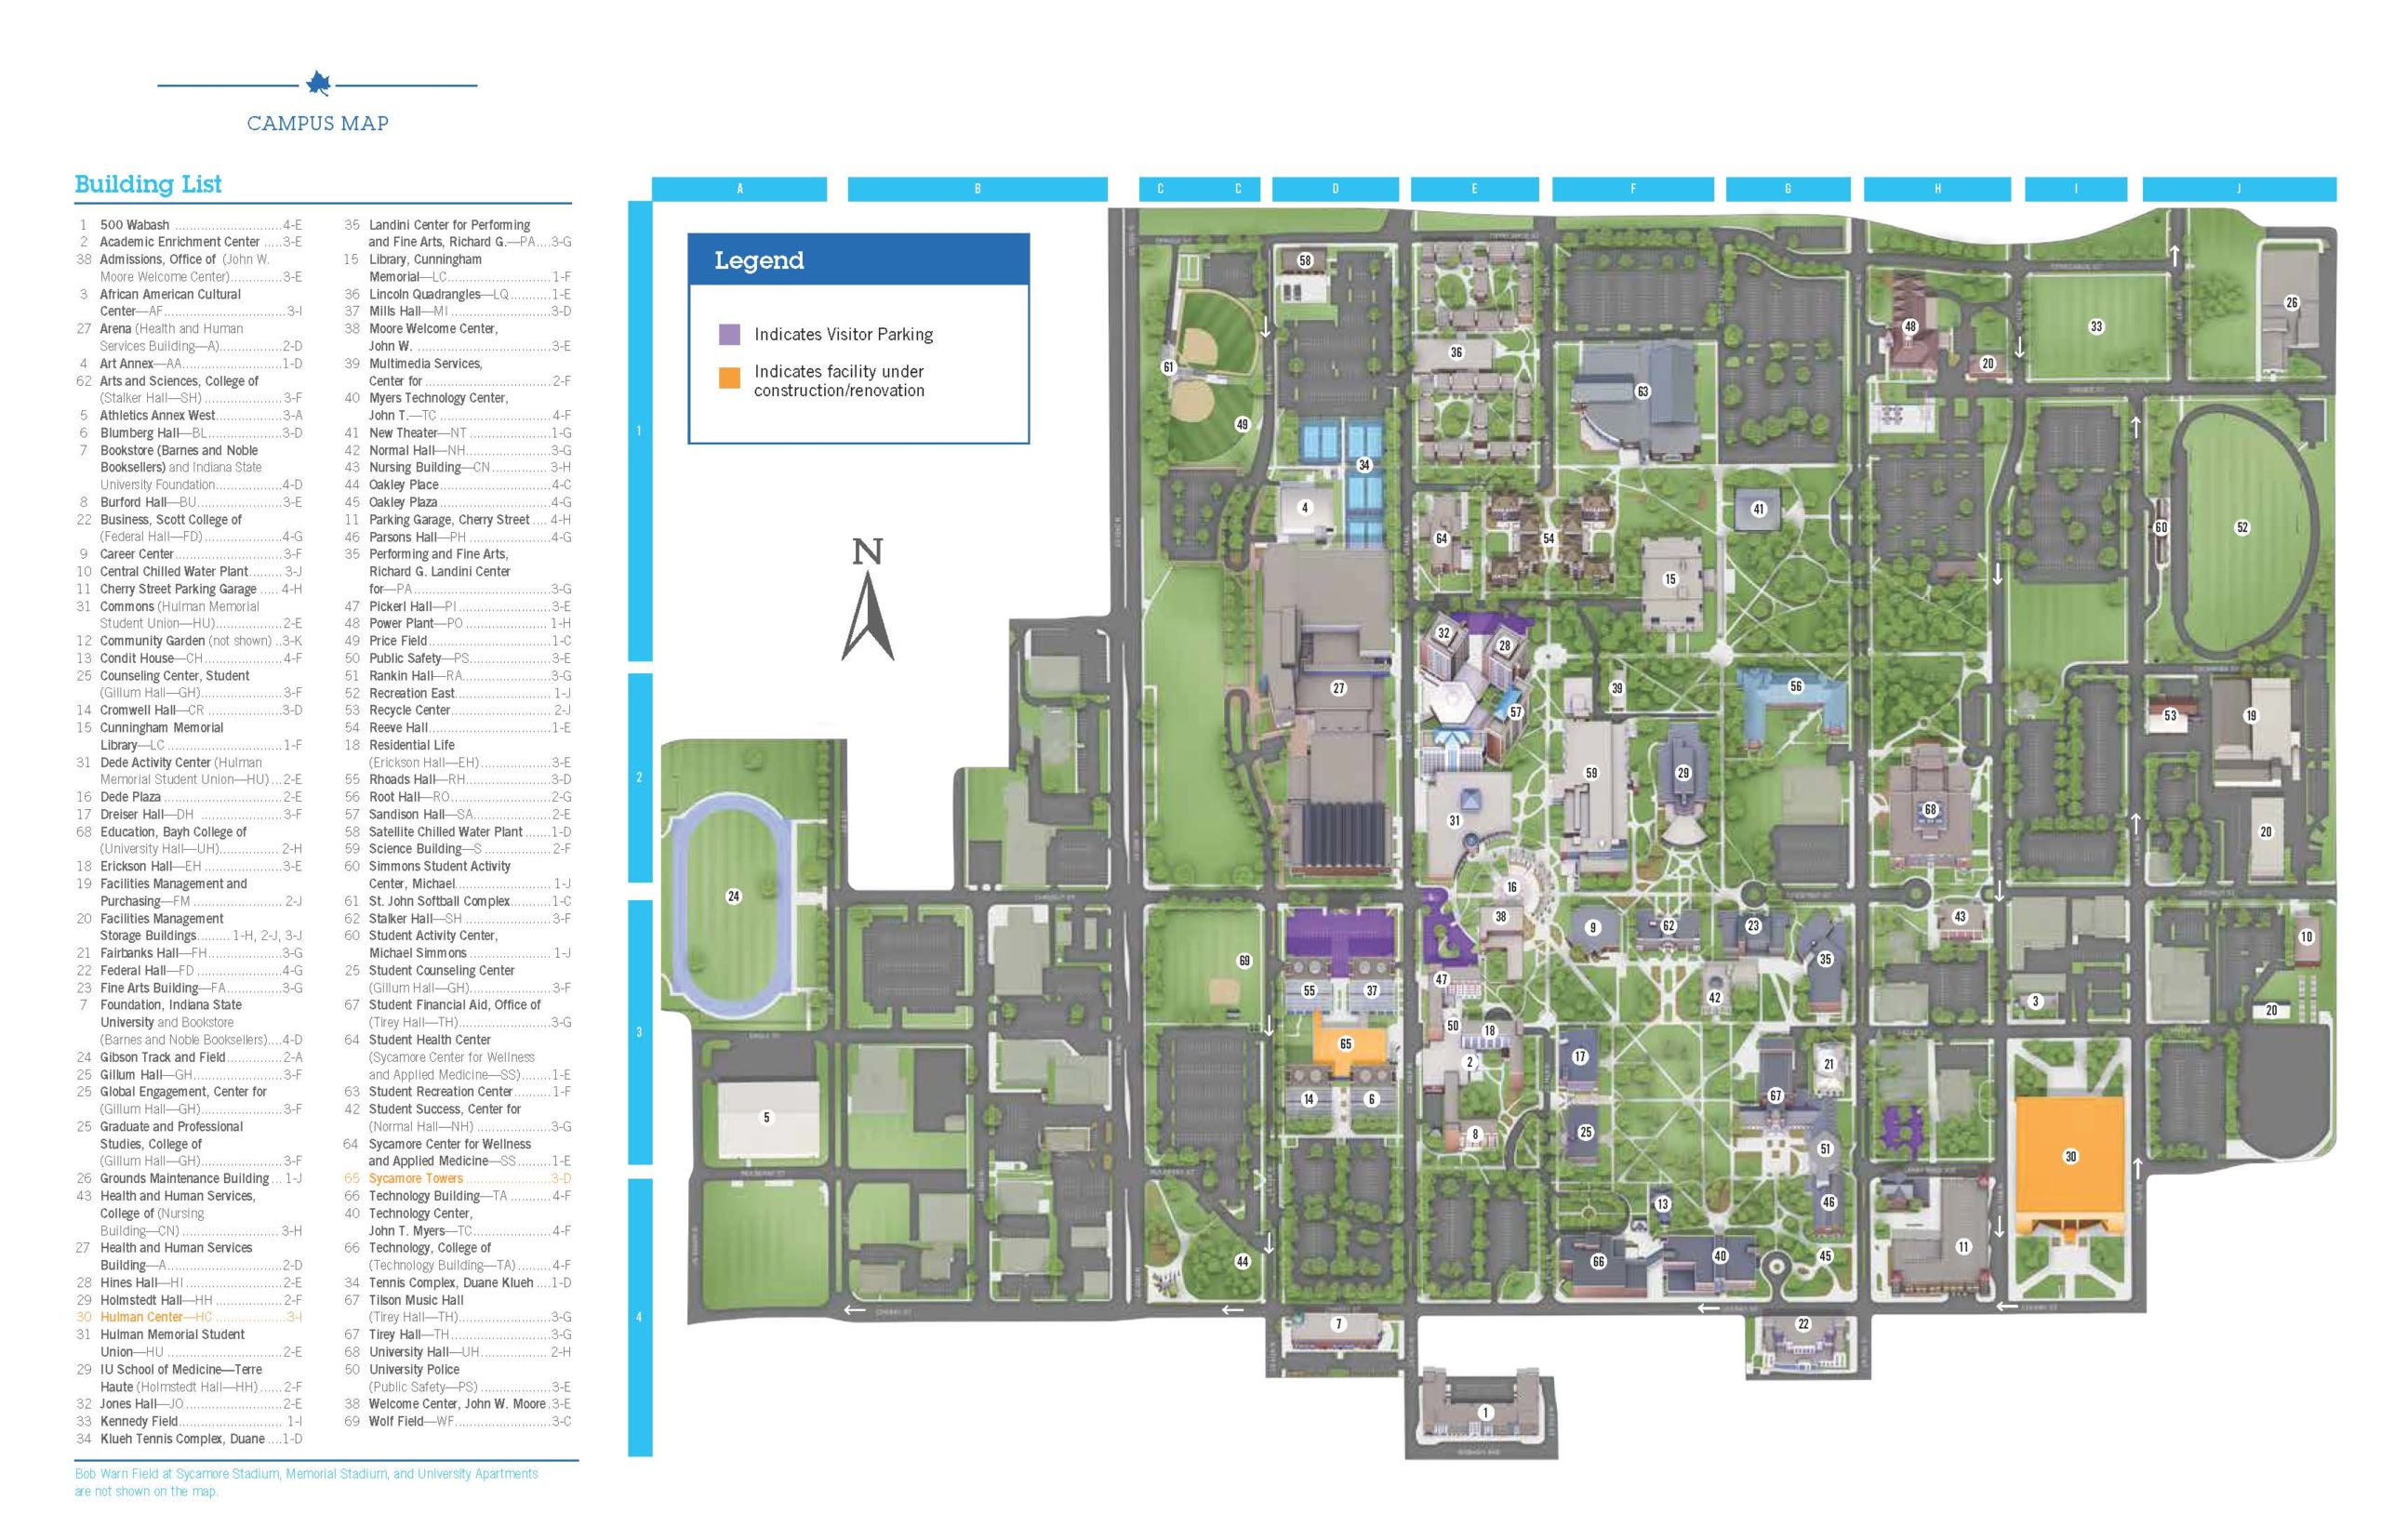 Campus Maps Home, Campus Maps